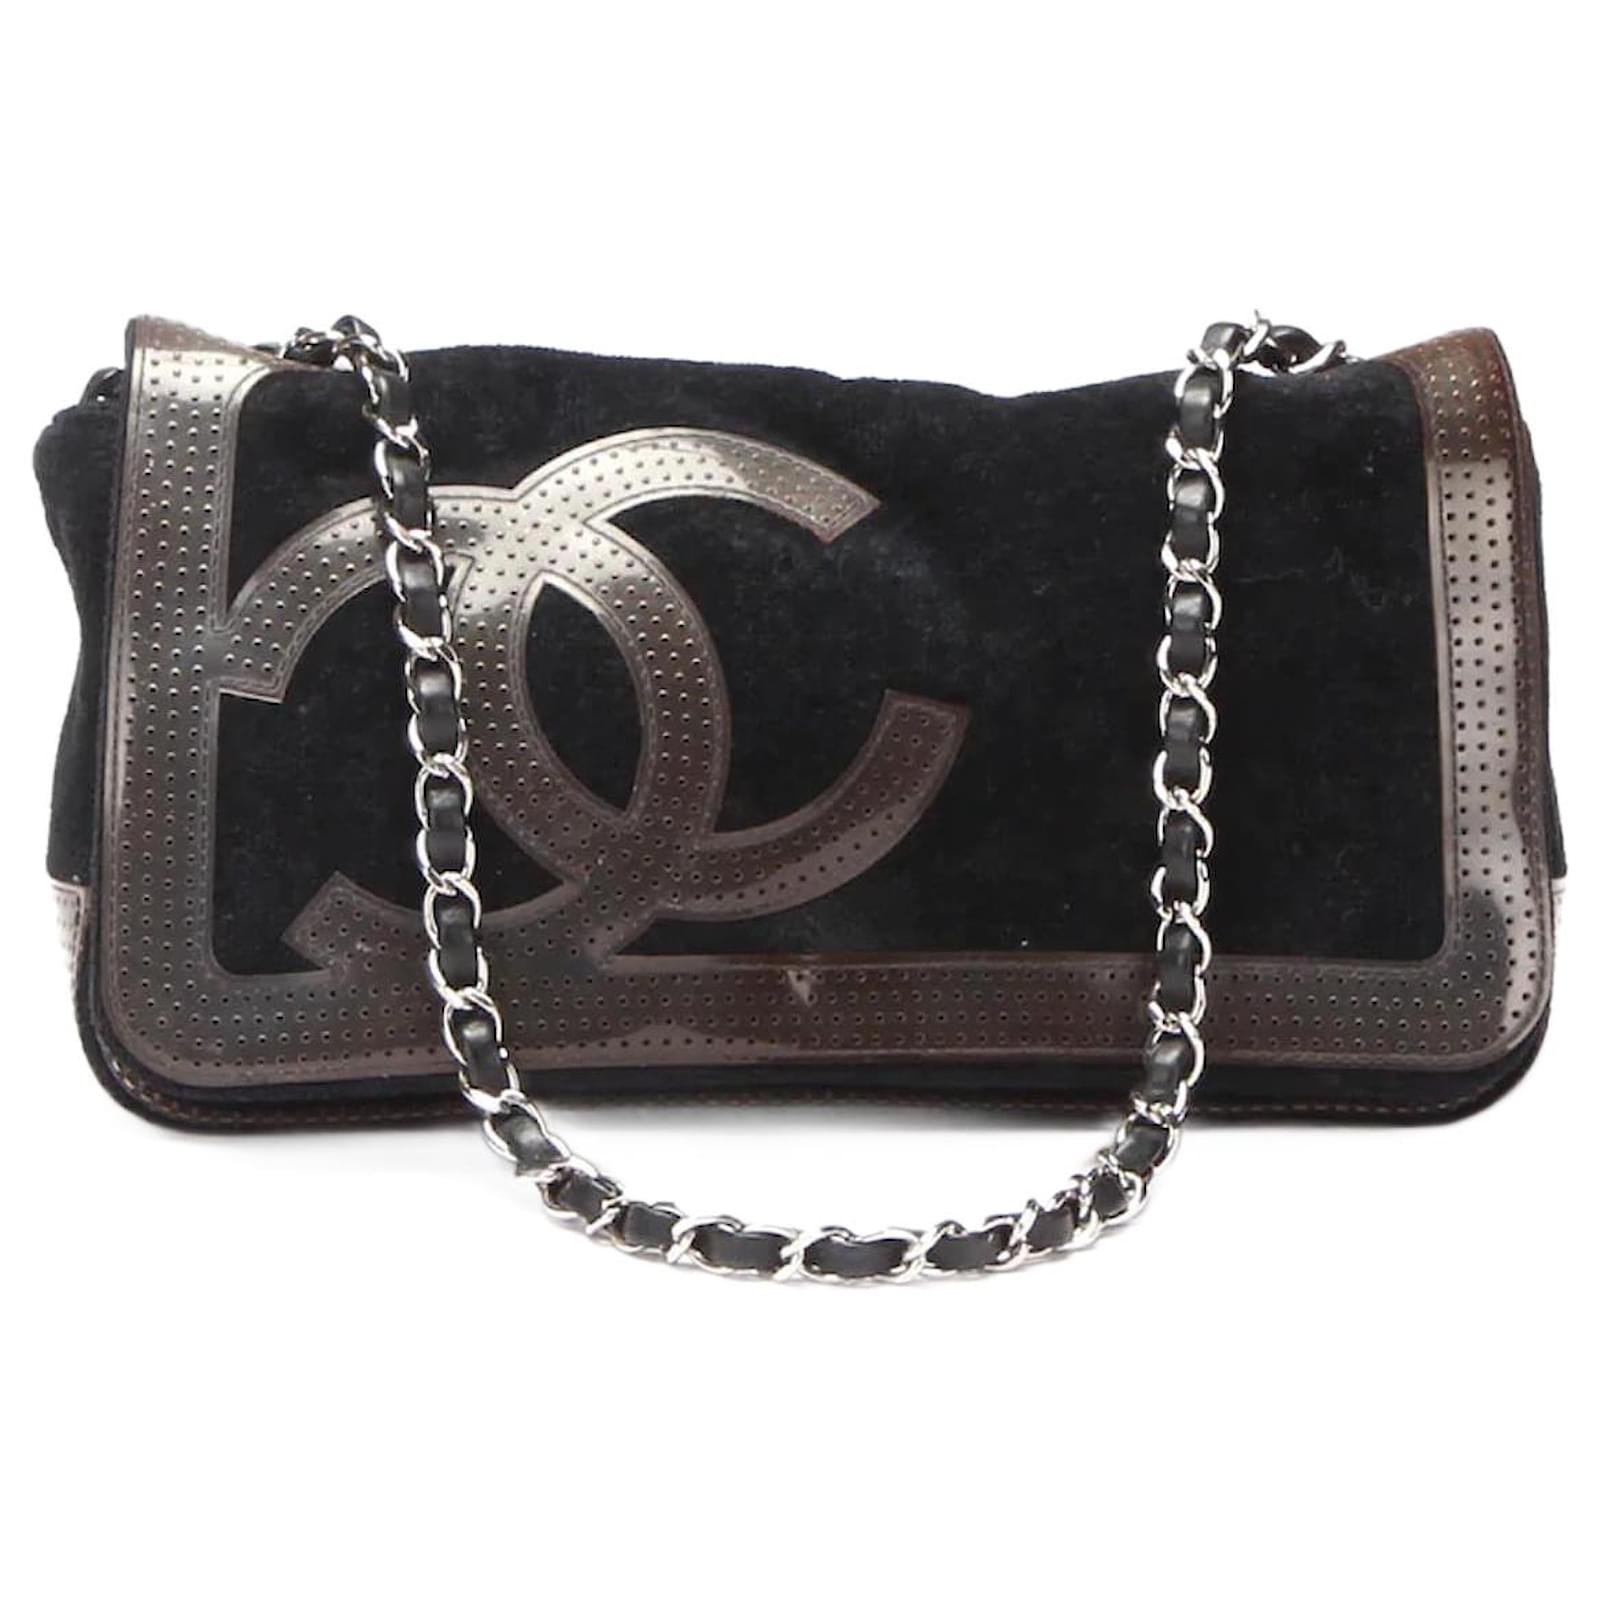 CHANEL, Bags, Chanel Cc Logo Black Precision Bag